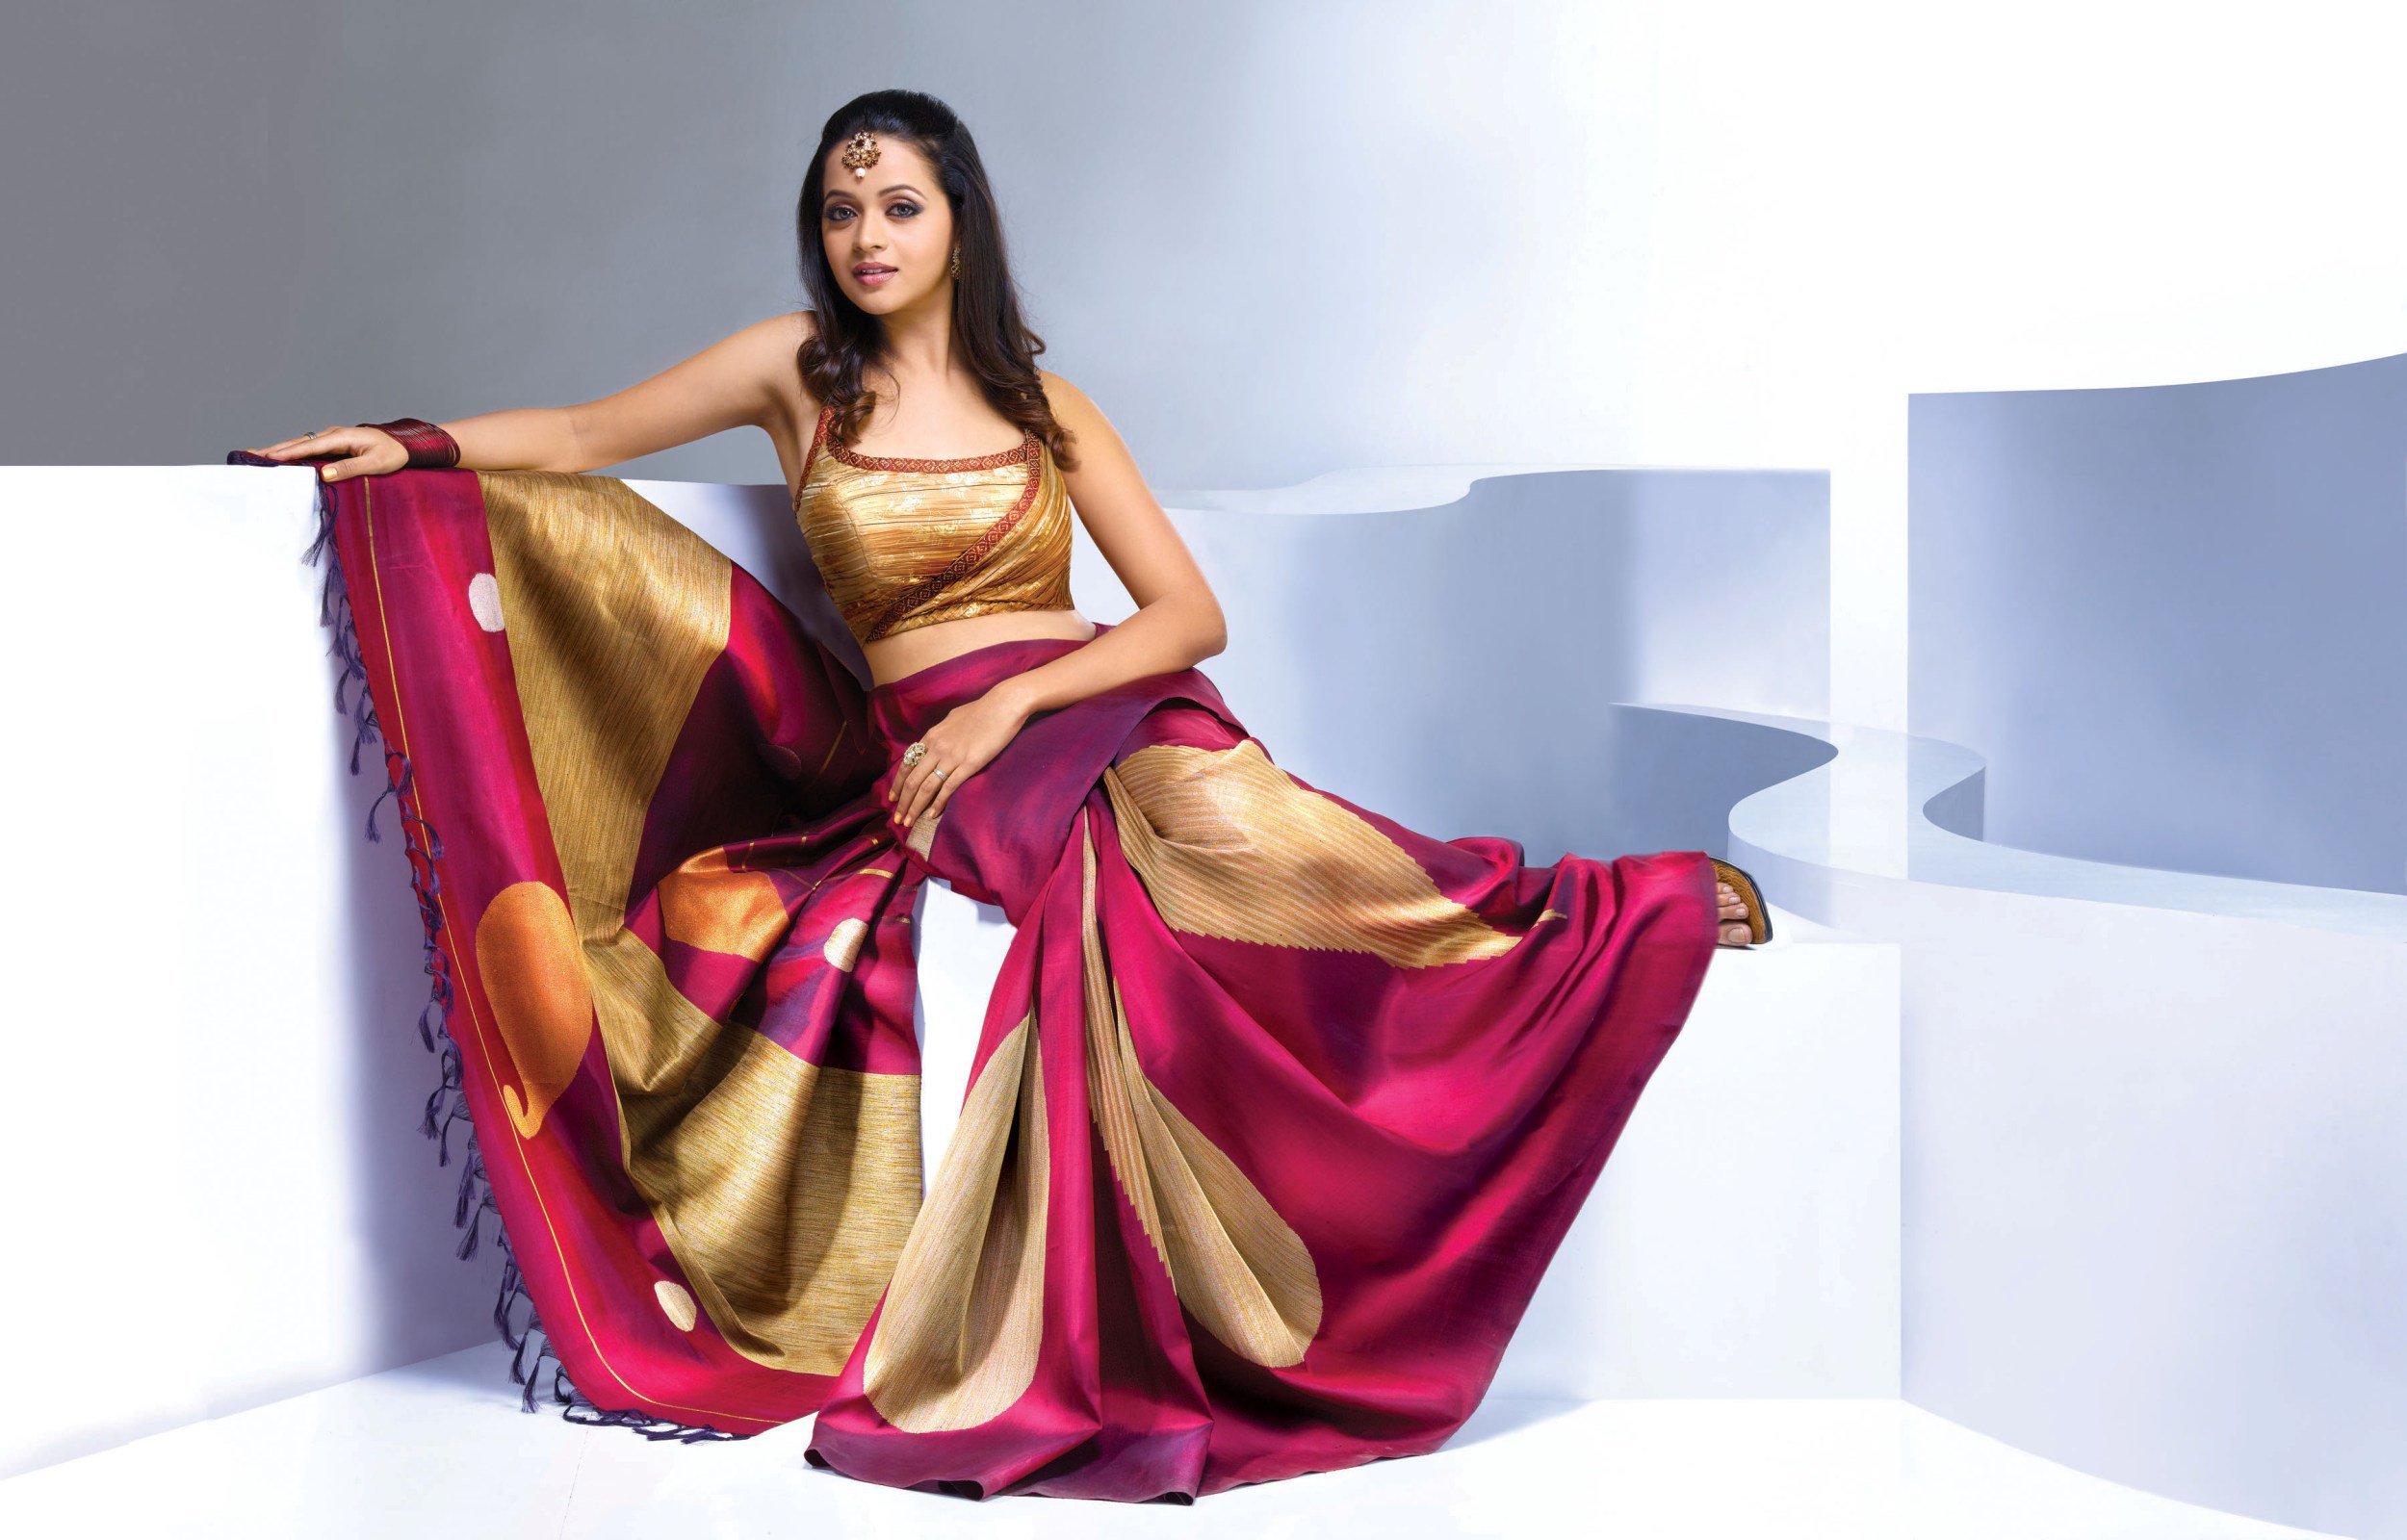 actress in saree Full HD desktop wallpapers,free desktop Hot Wallpapers